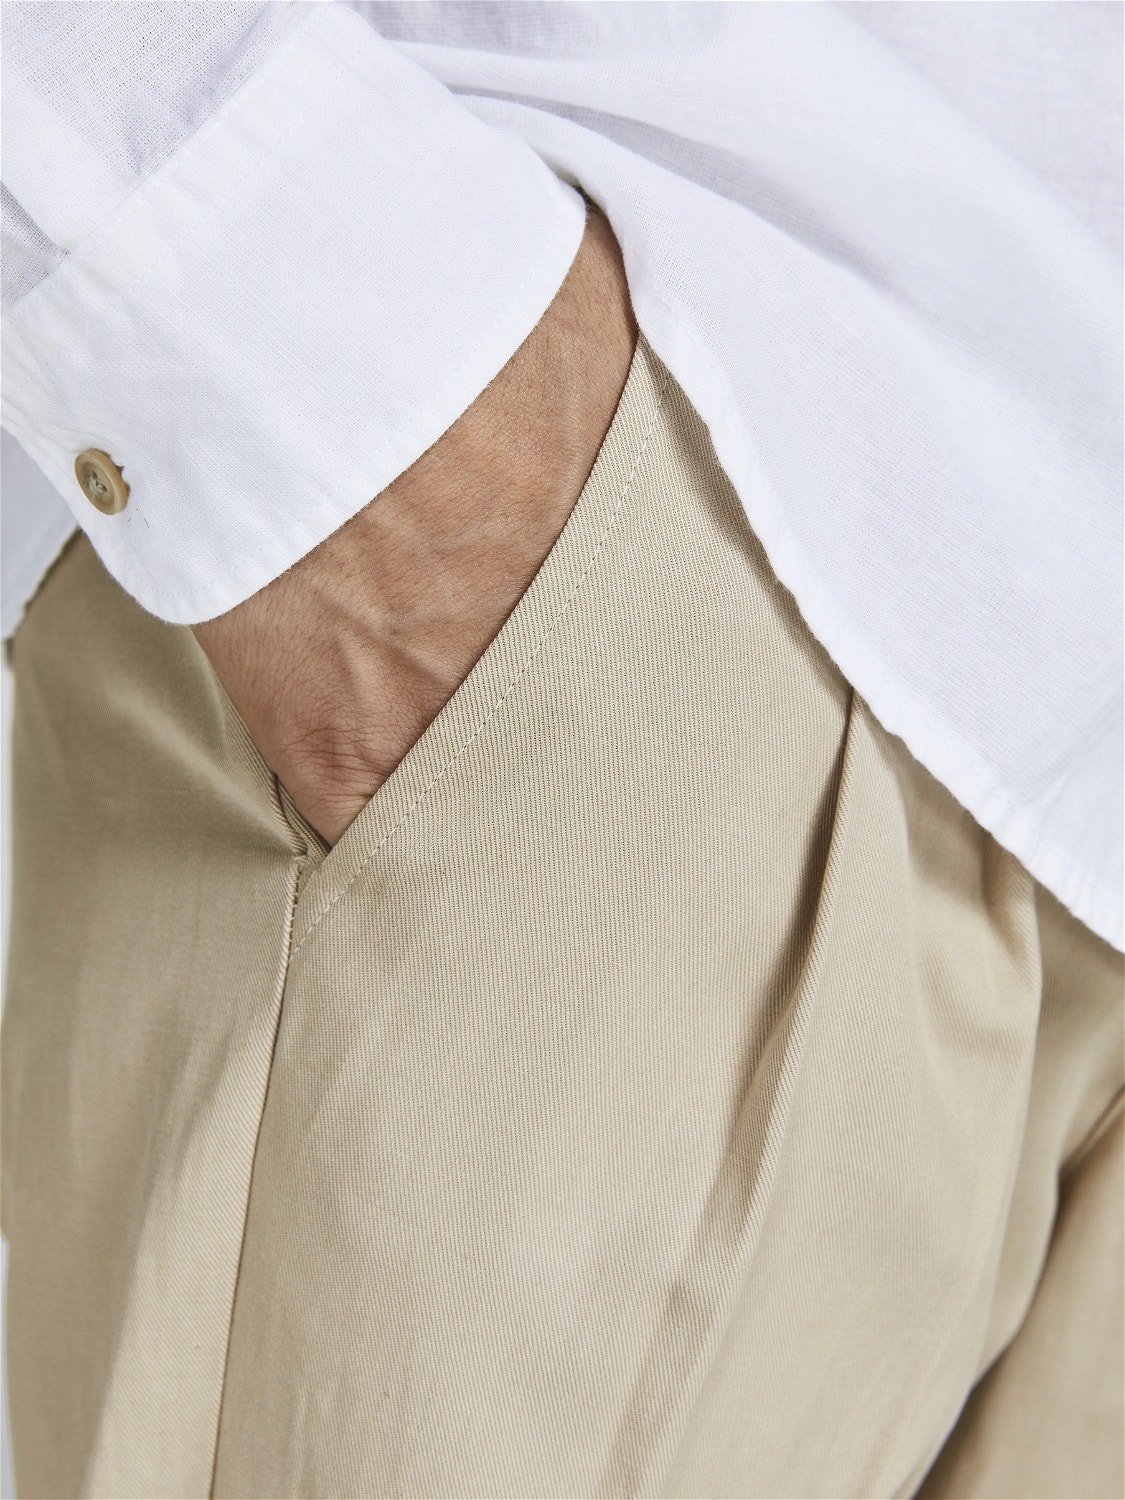 Jack & Jones Παντελόνι Regular Fit Chinos -Oxford Tan - 12210190